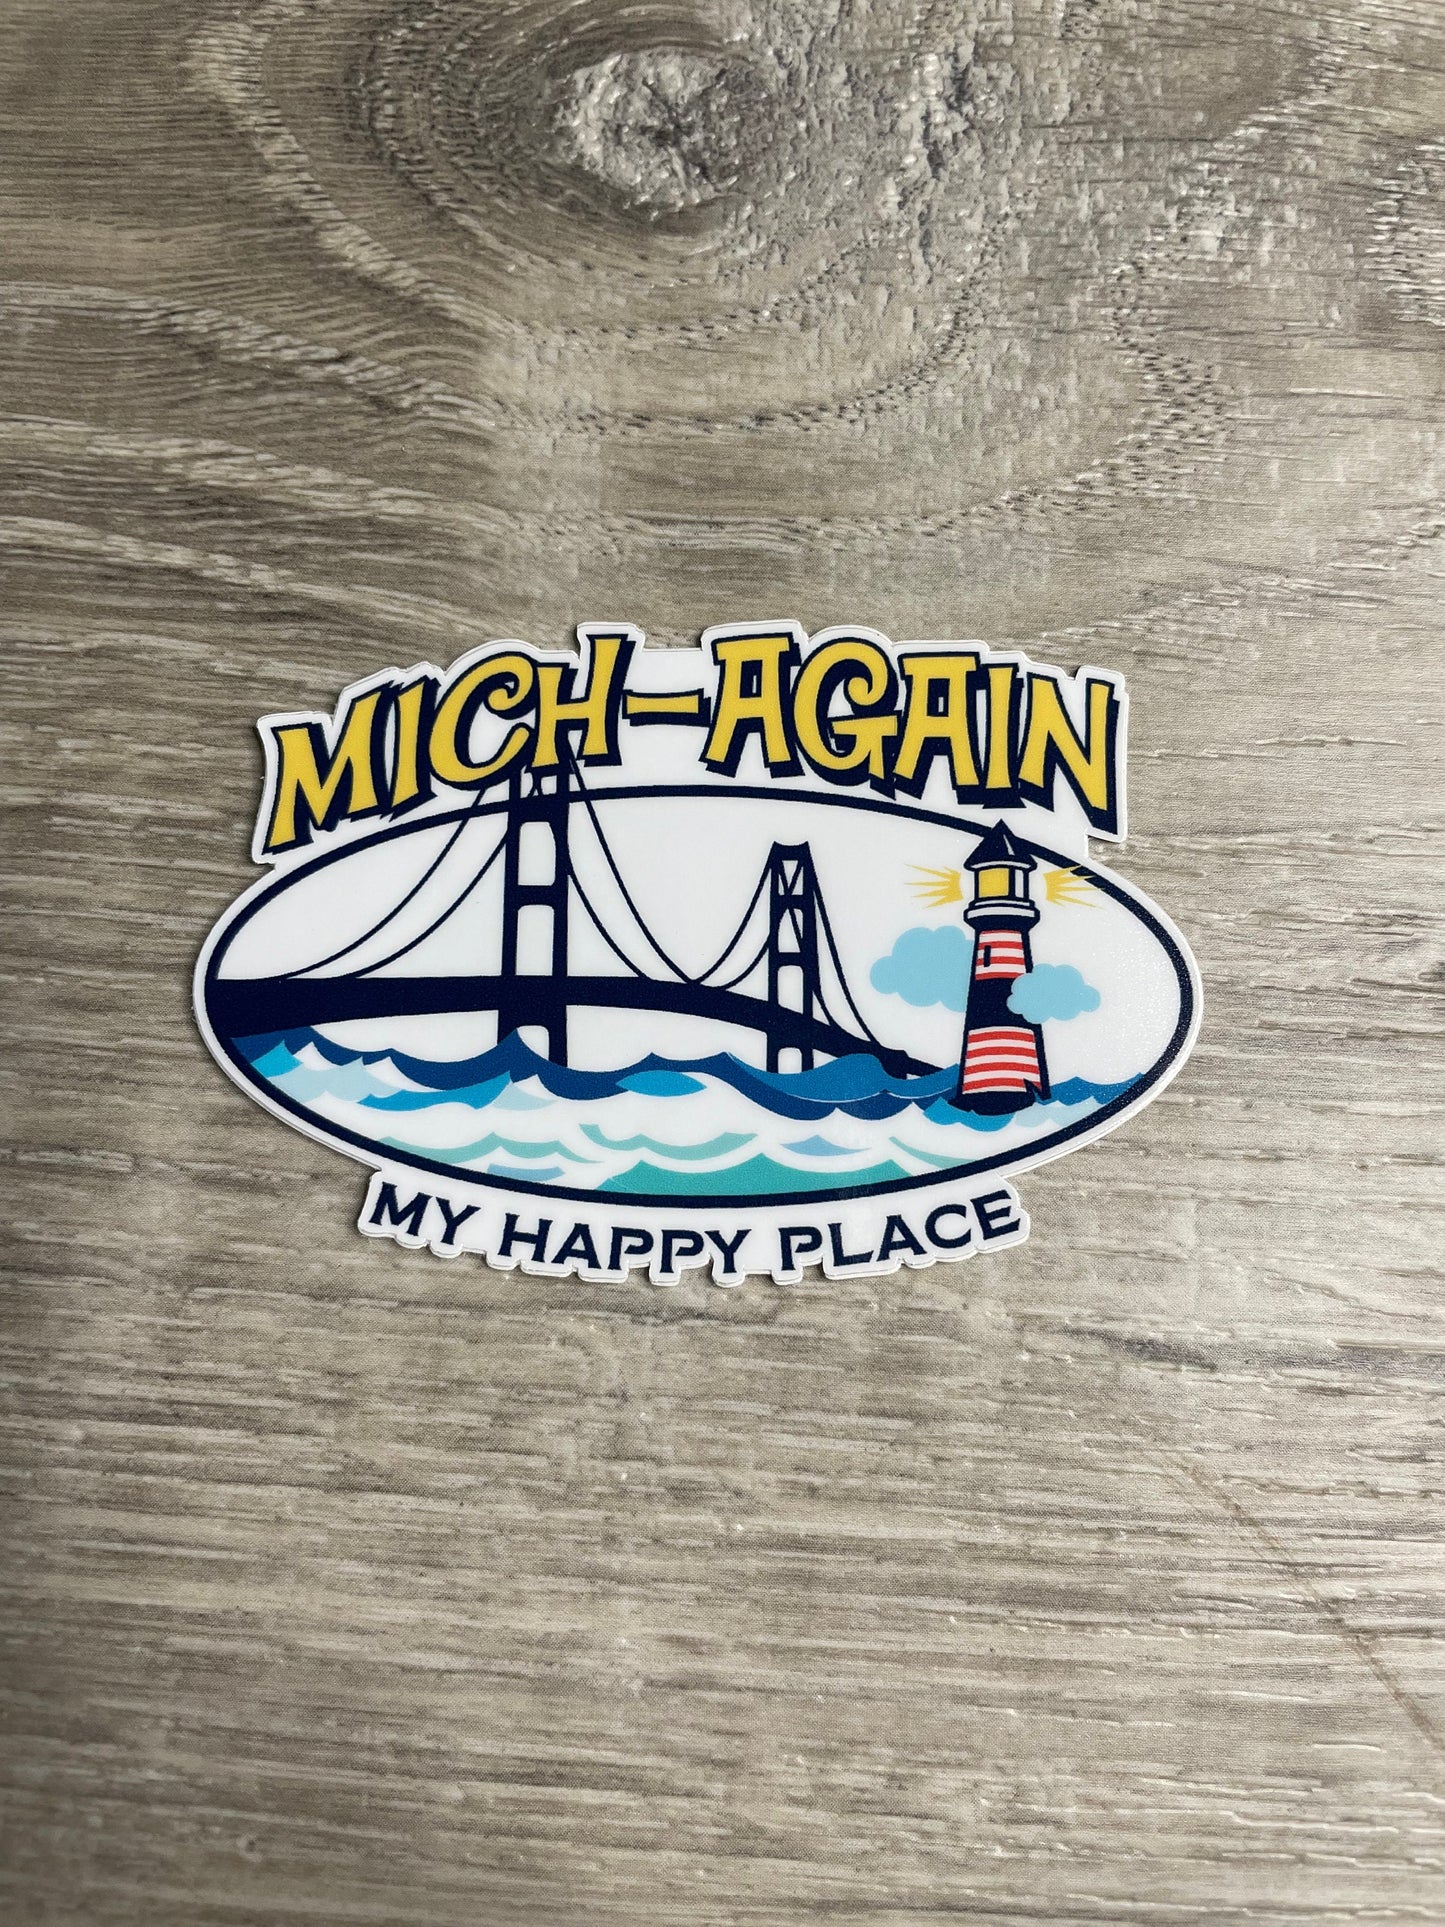 Mich-again My Happy Place Bridge Vinyl Sticker, Vinyl Decal, Laptop Sticker, Michigan Sticker, Michigan gift, Mackinac Bridge